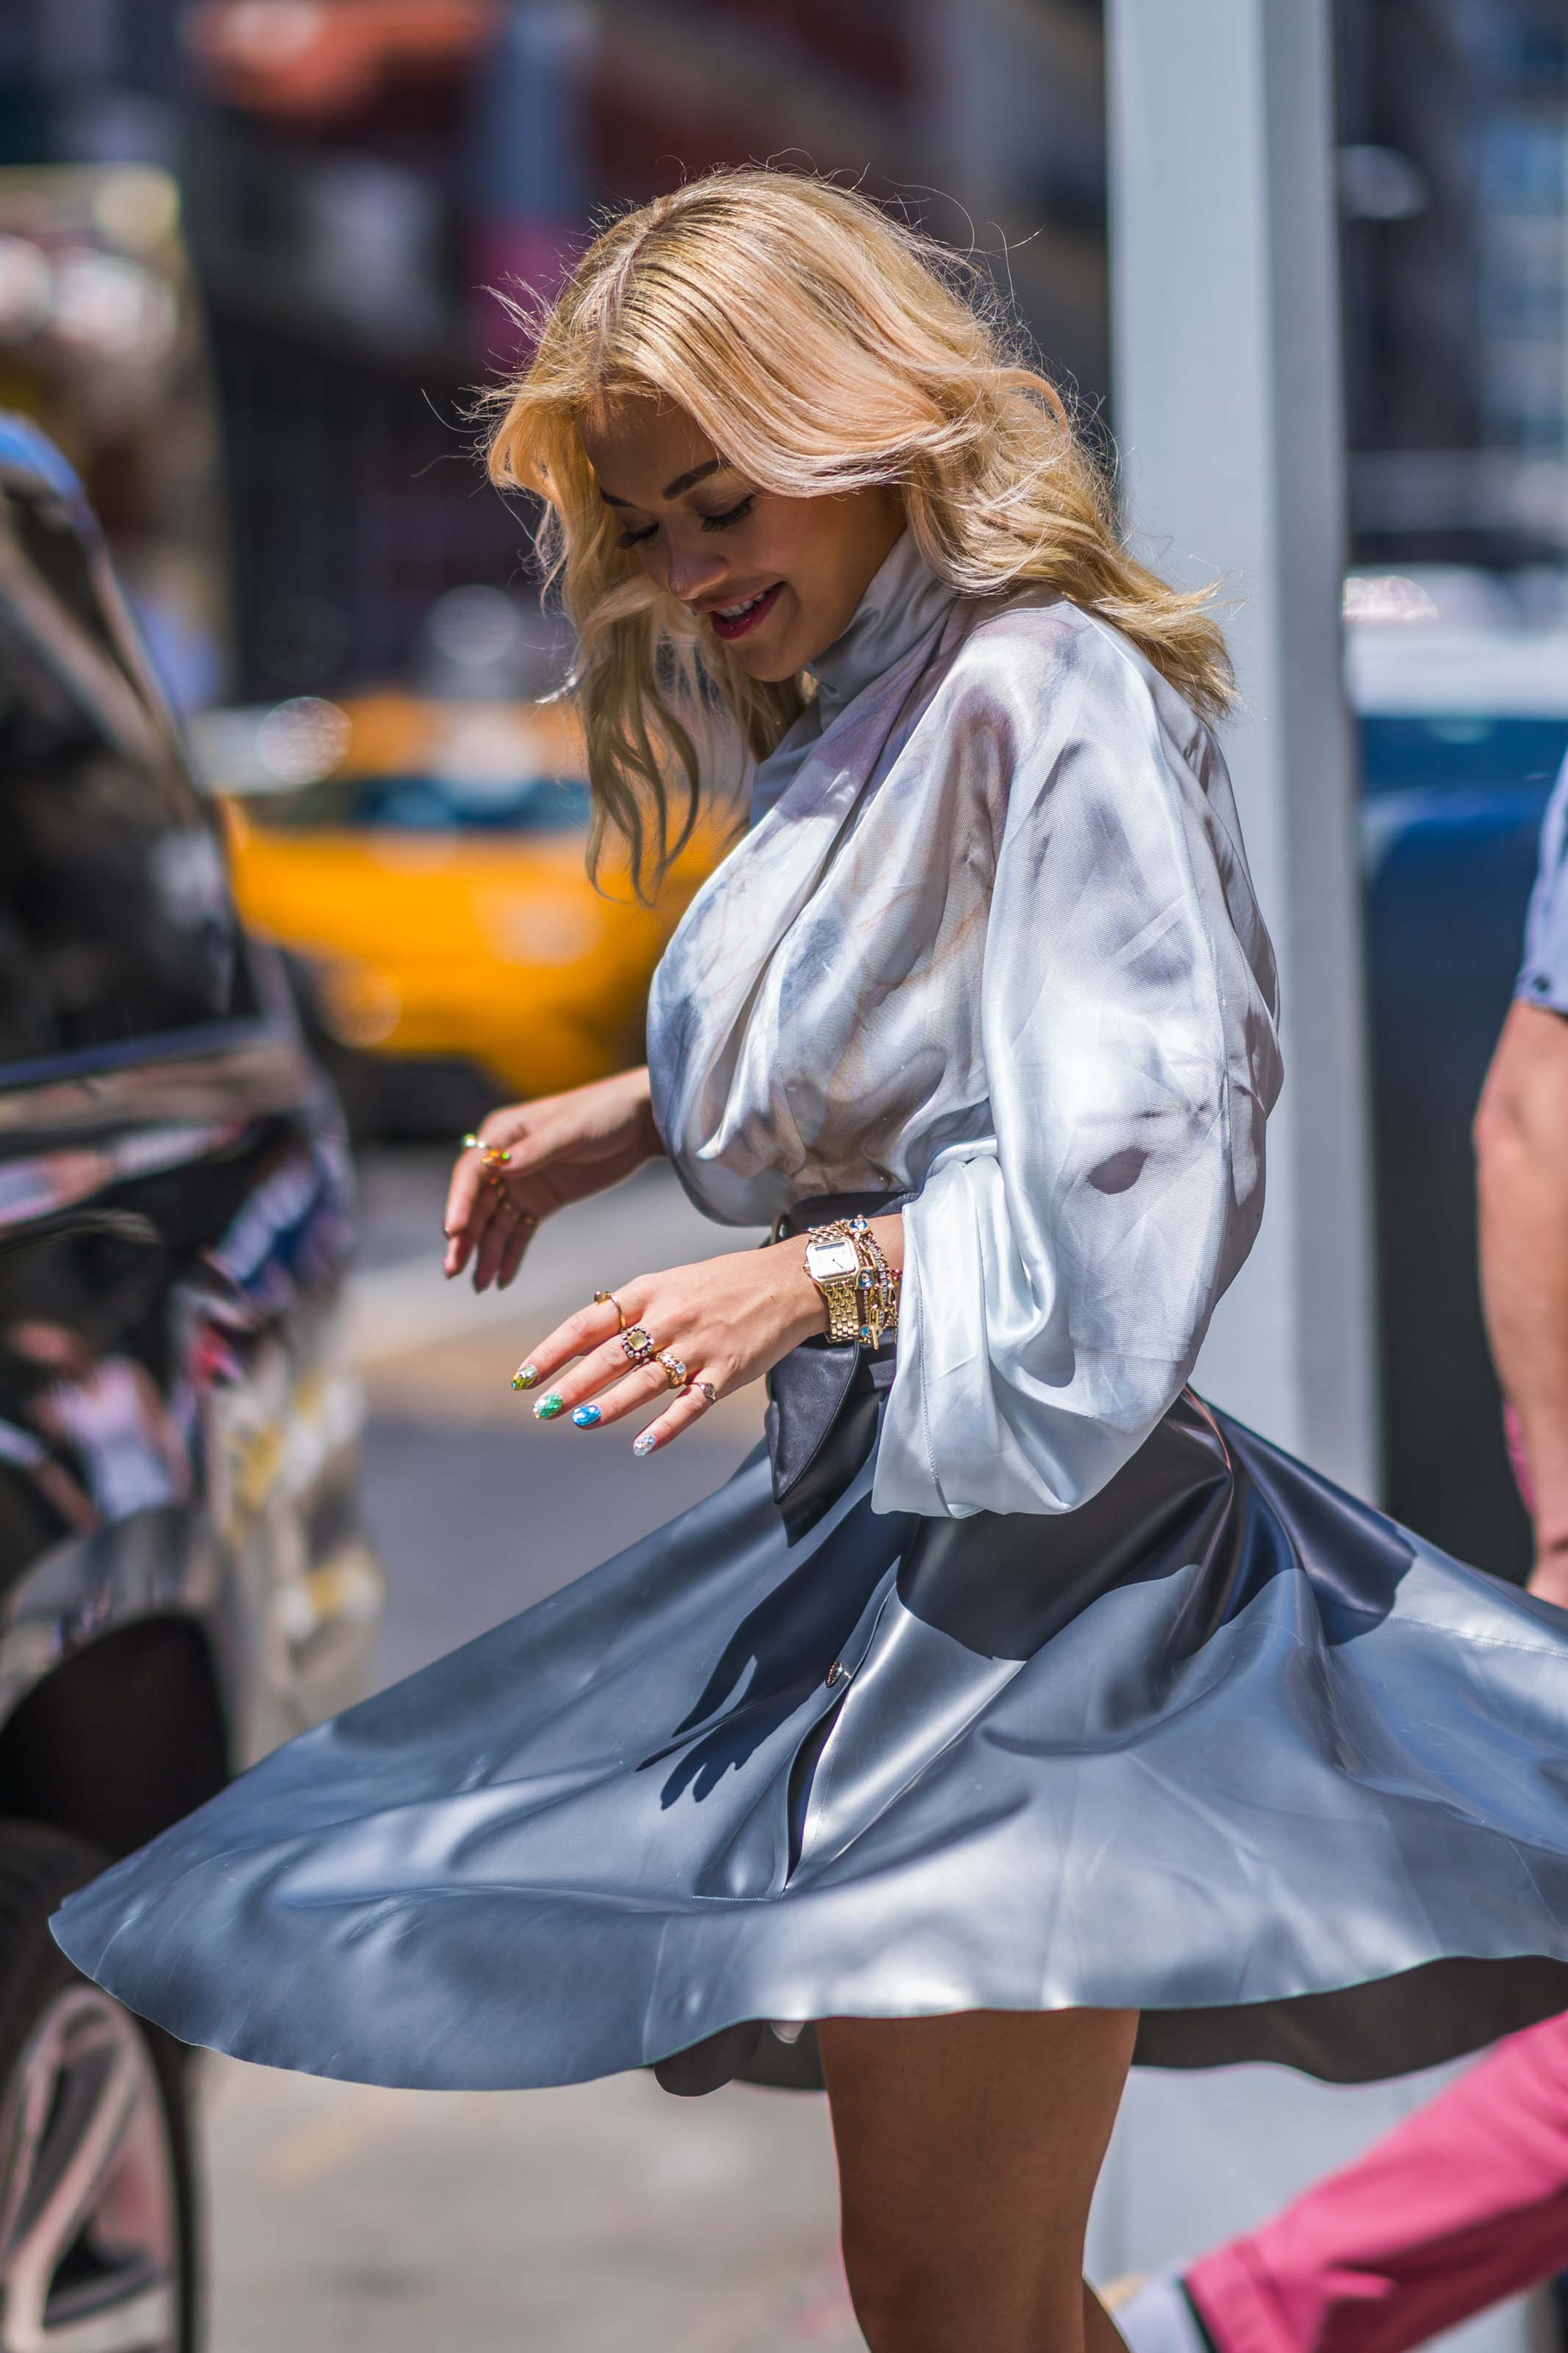 Rita Ora seen in New York City